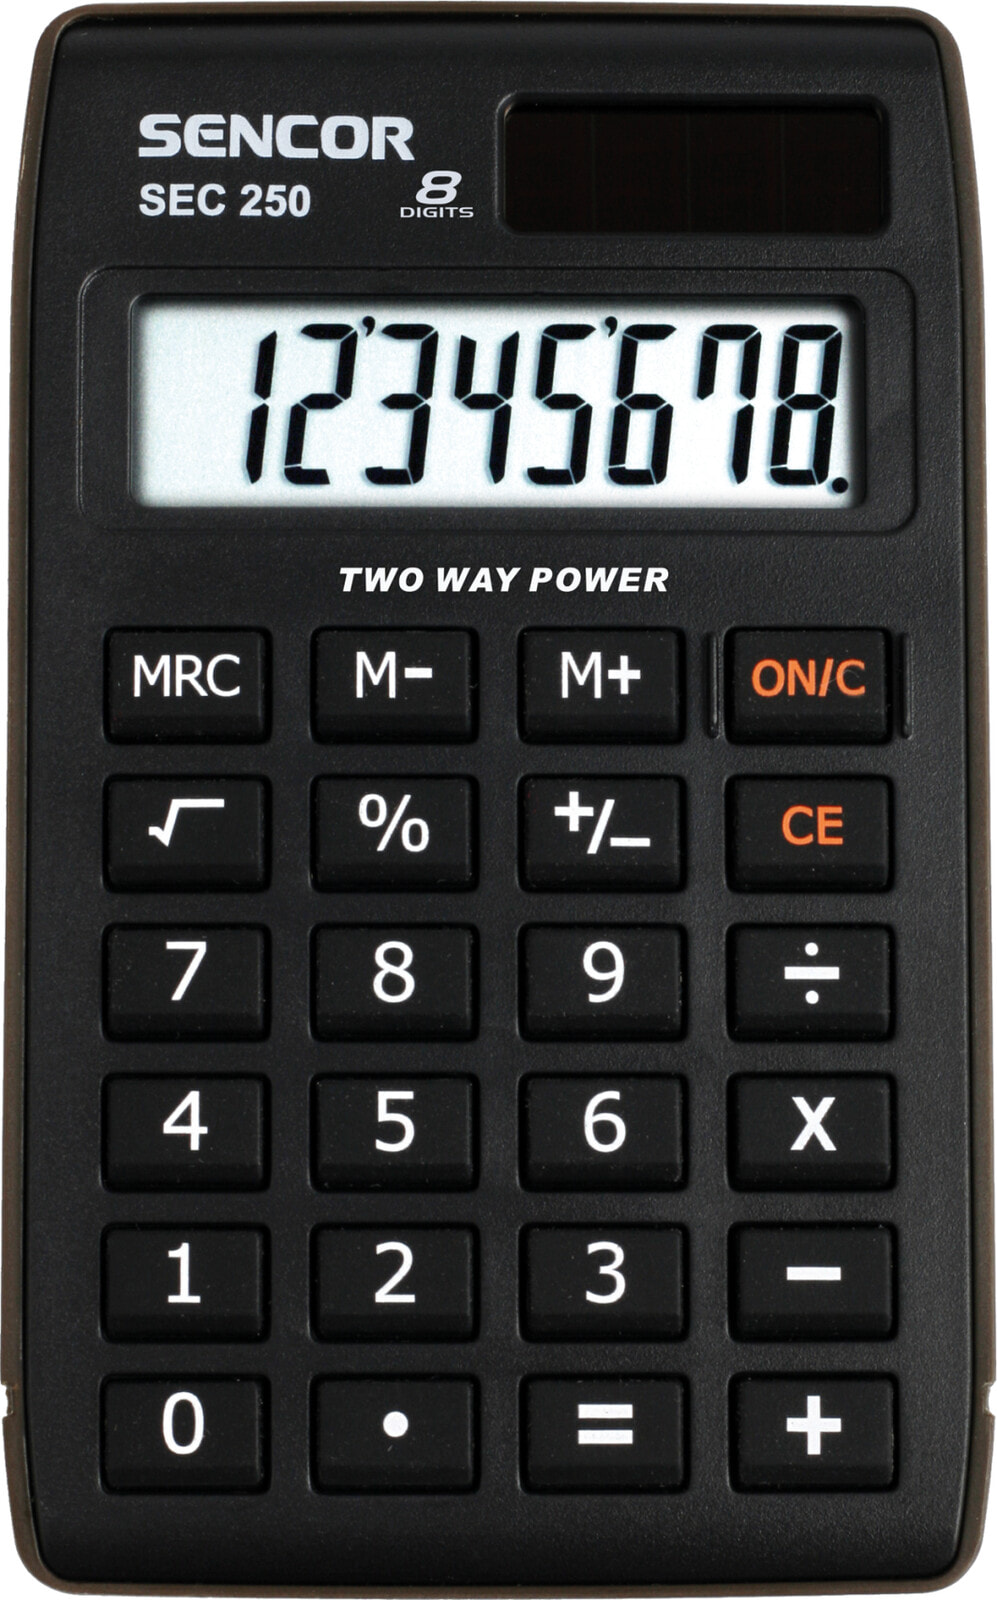 Sencor SEC 250 calculator